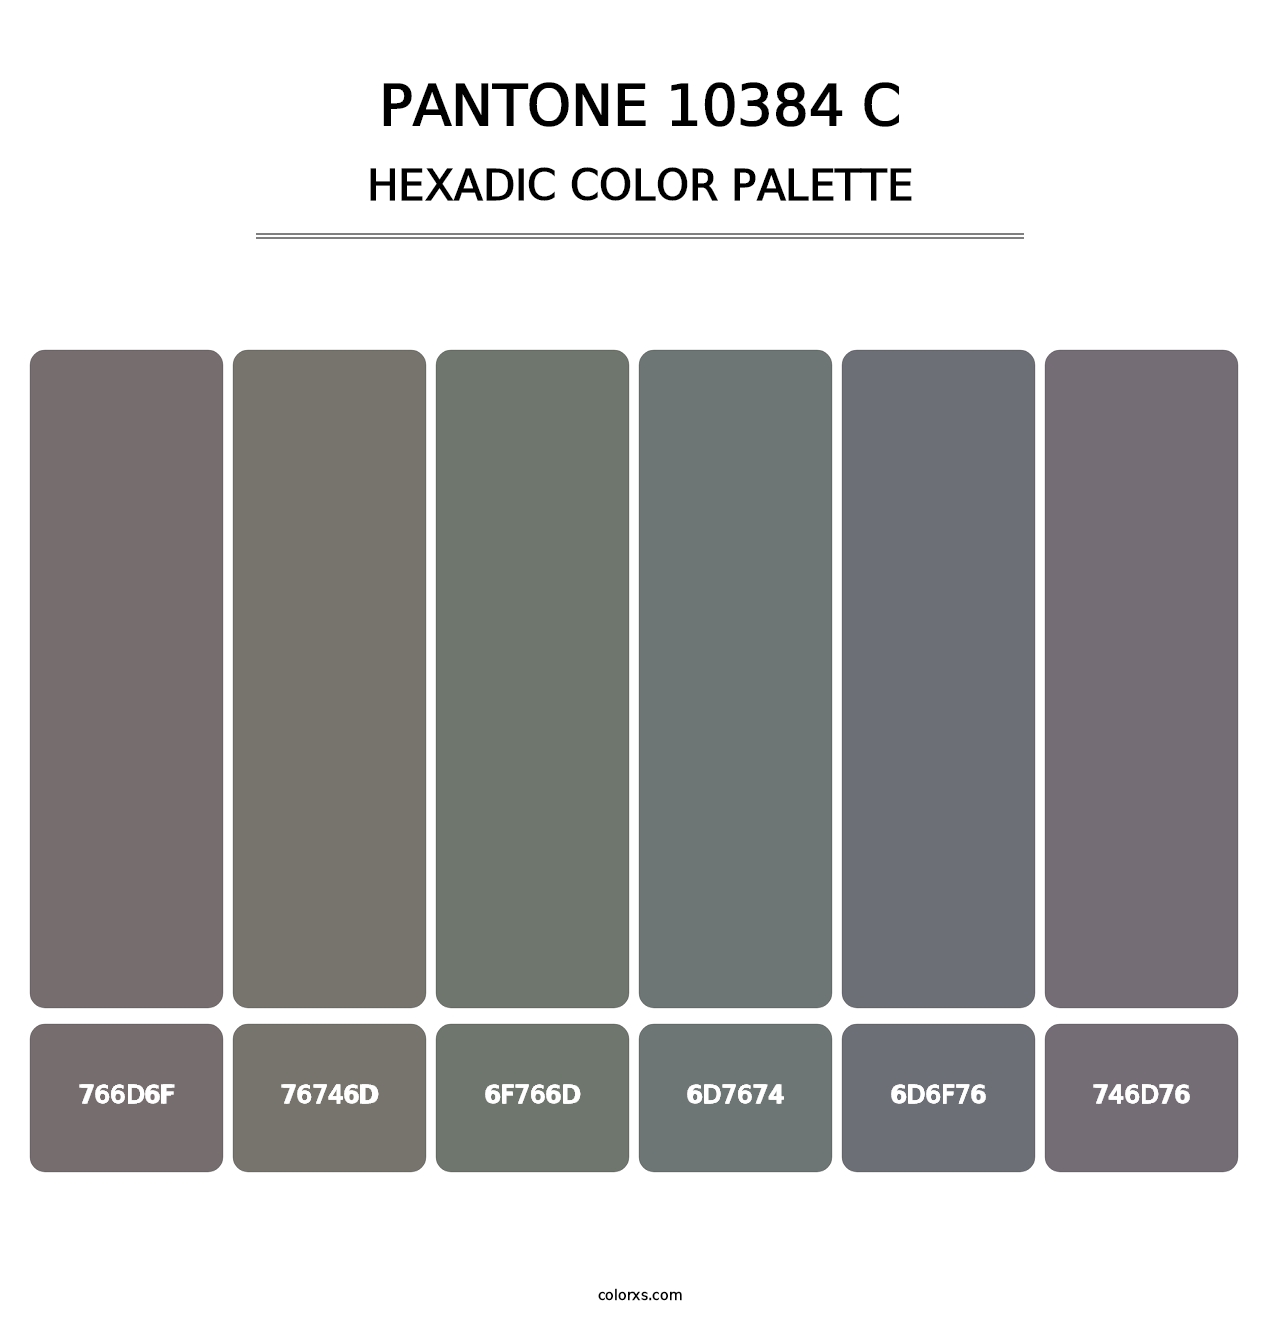 PANTONE 10384 C - Hexadic Color Palette